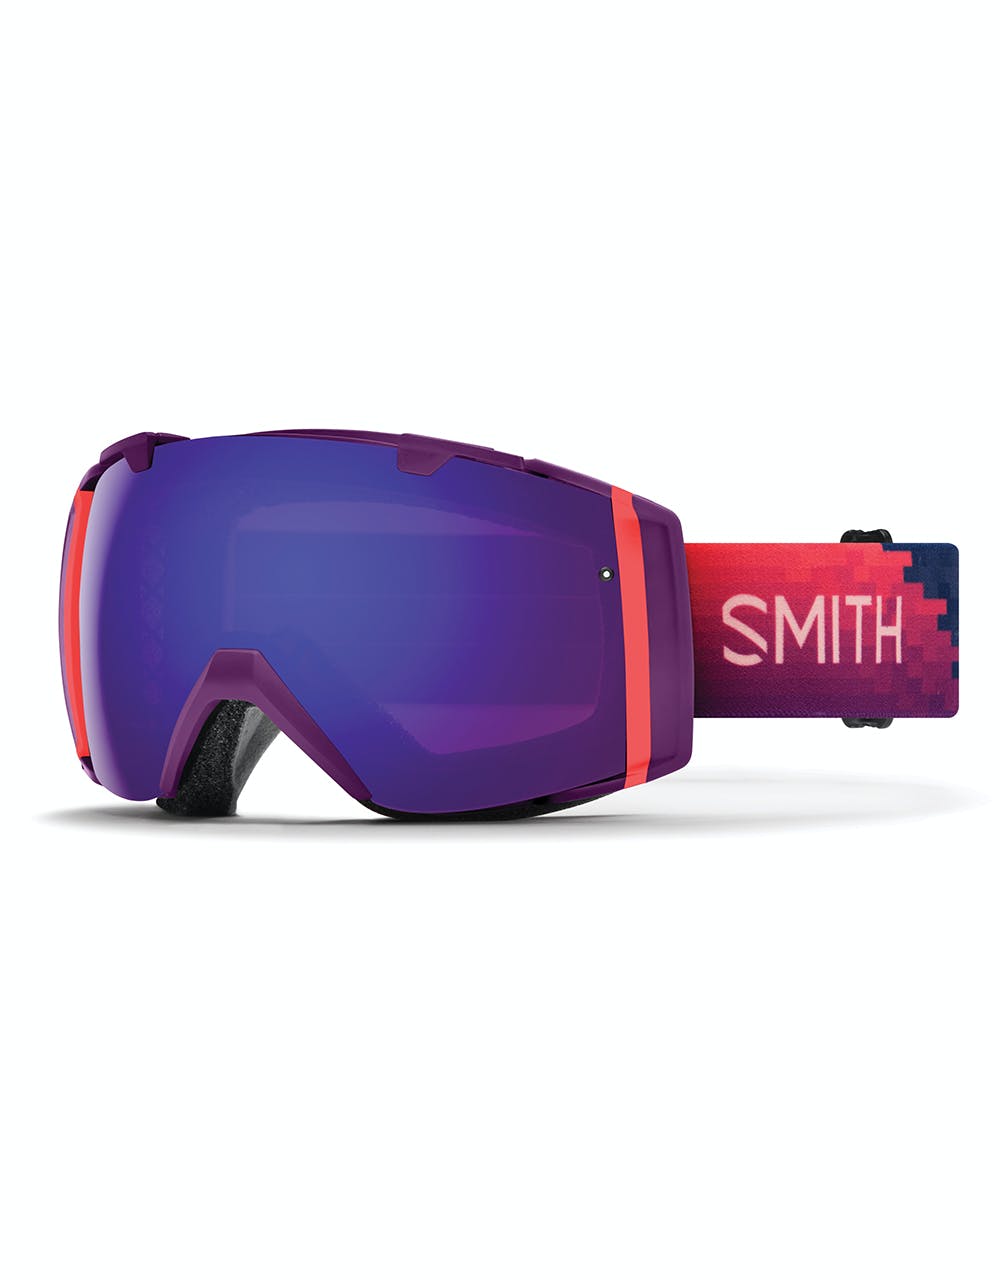 Smith I/O Snowboard Goggles - Monarch Reset/Violet Mirror